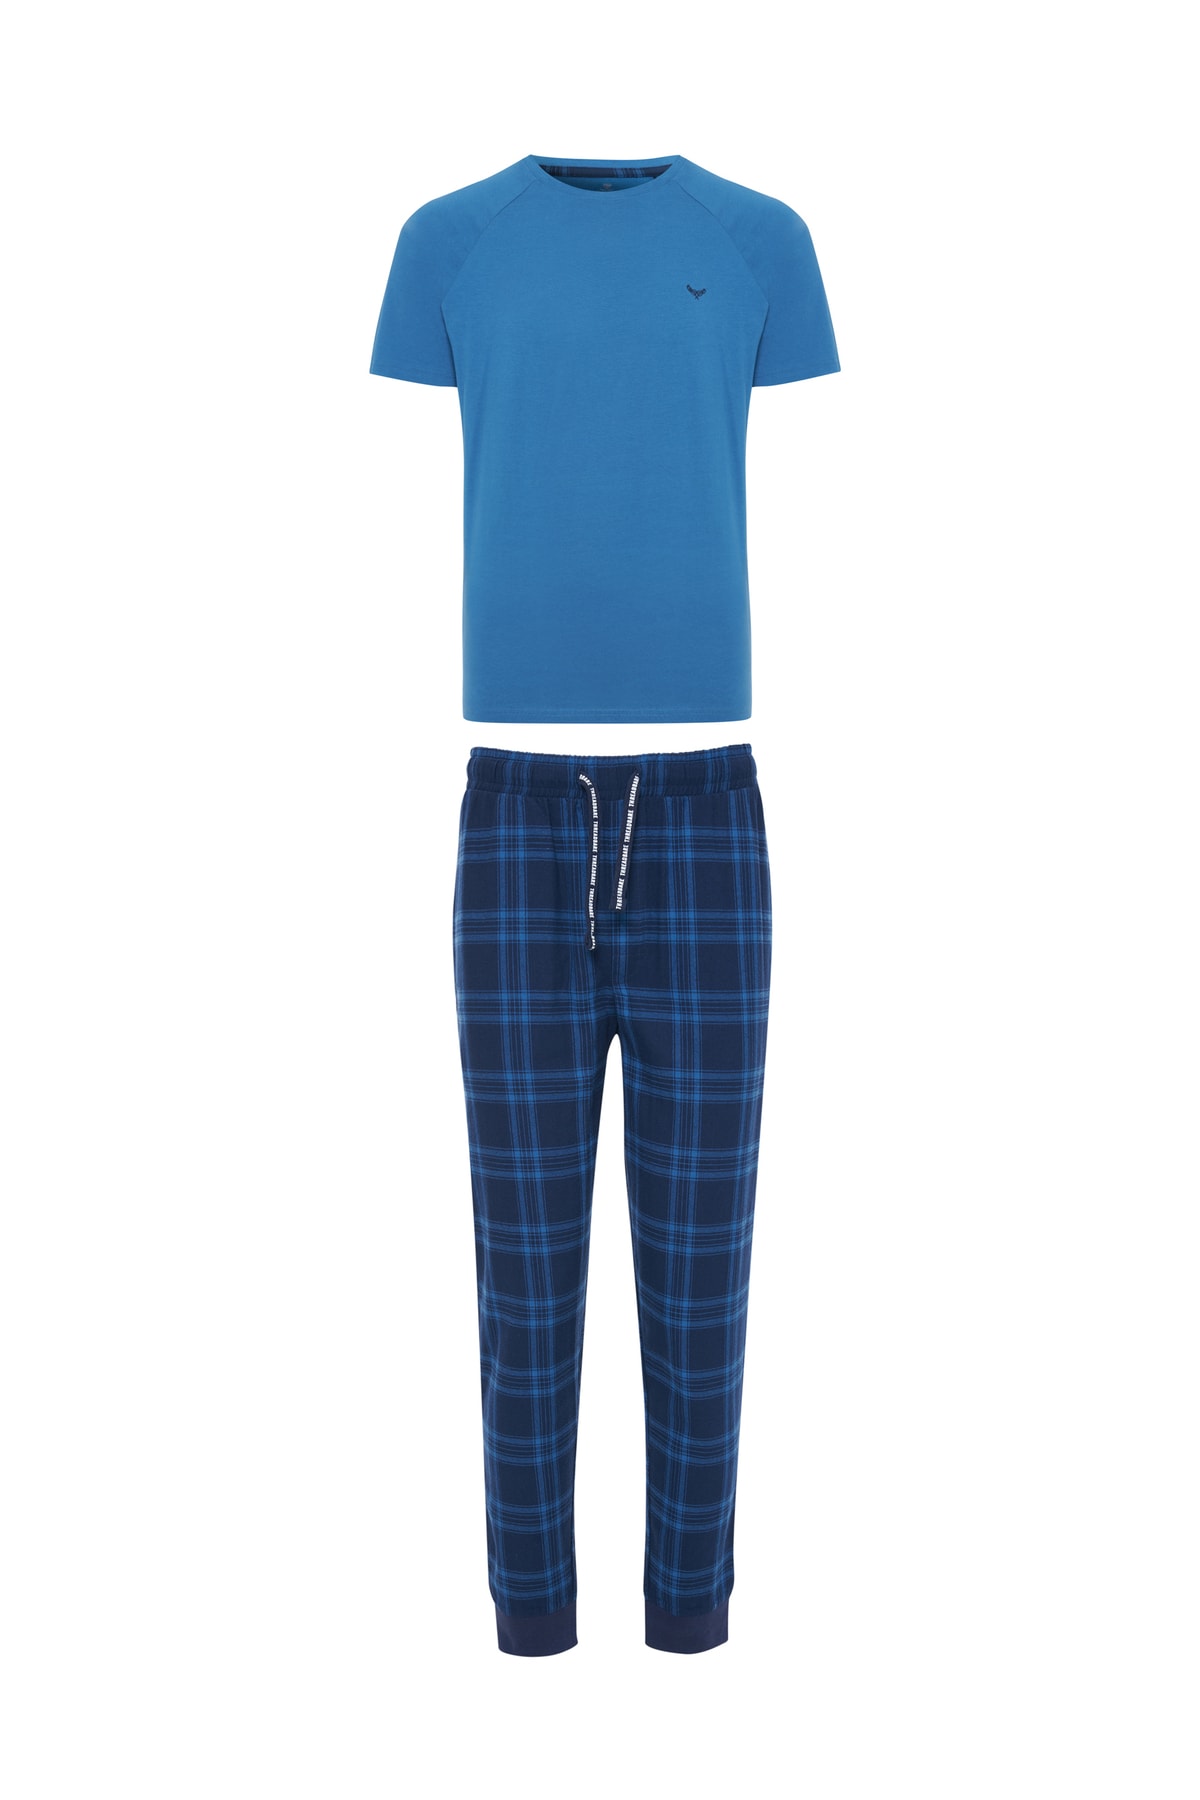 Threadbare Pyjama Blau Kariert Fast ausverkauft